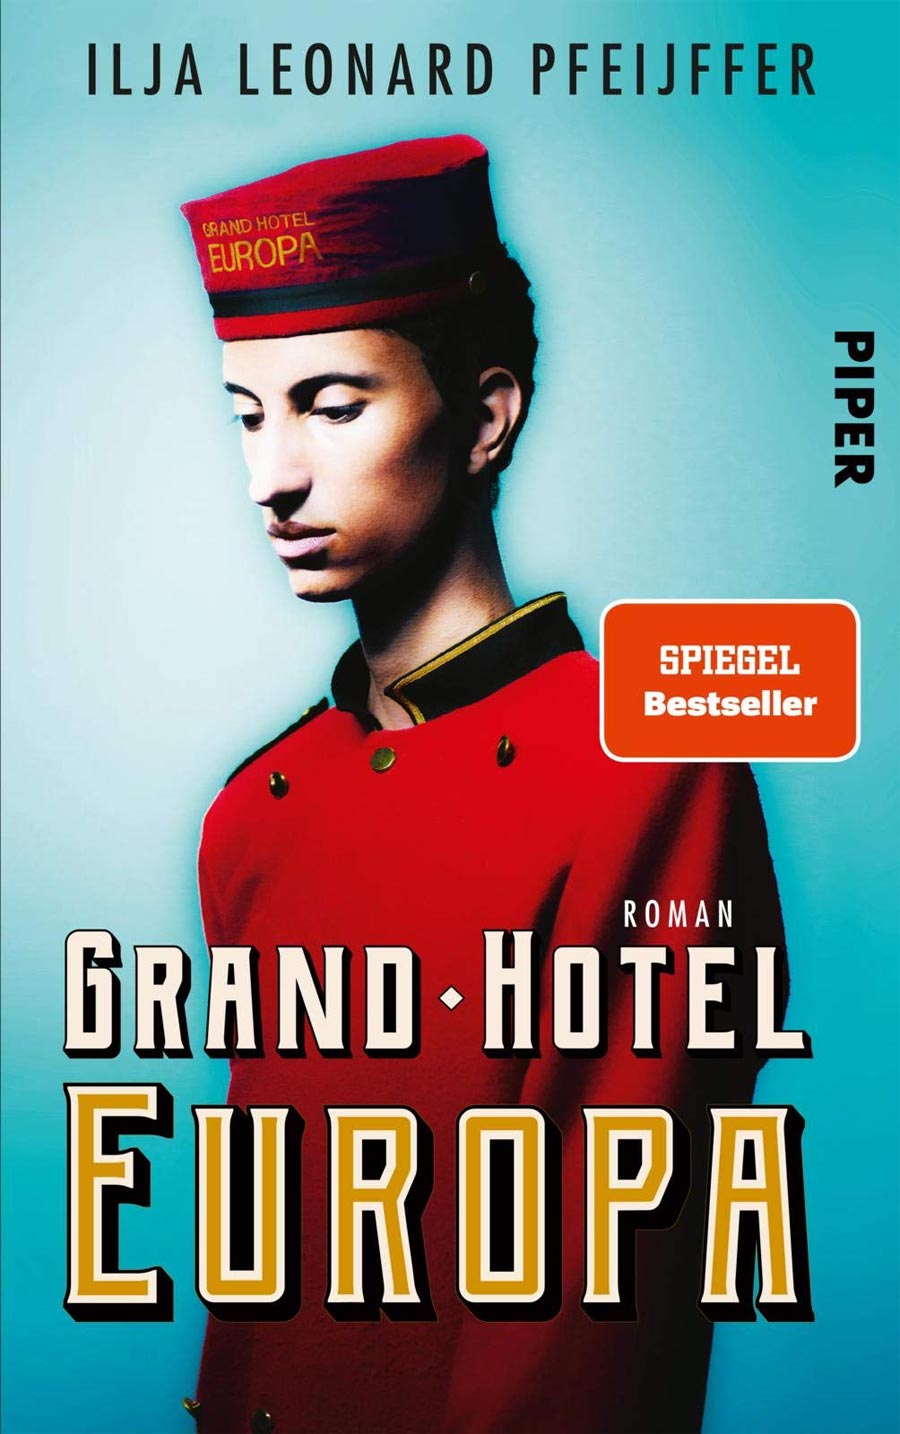 Ilja Leonard Pfeijffer, Grand Hotel Europa